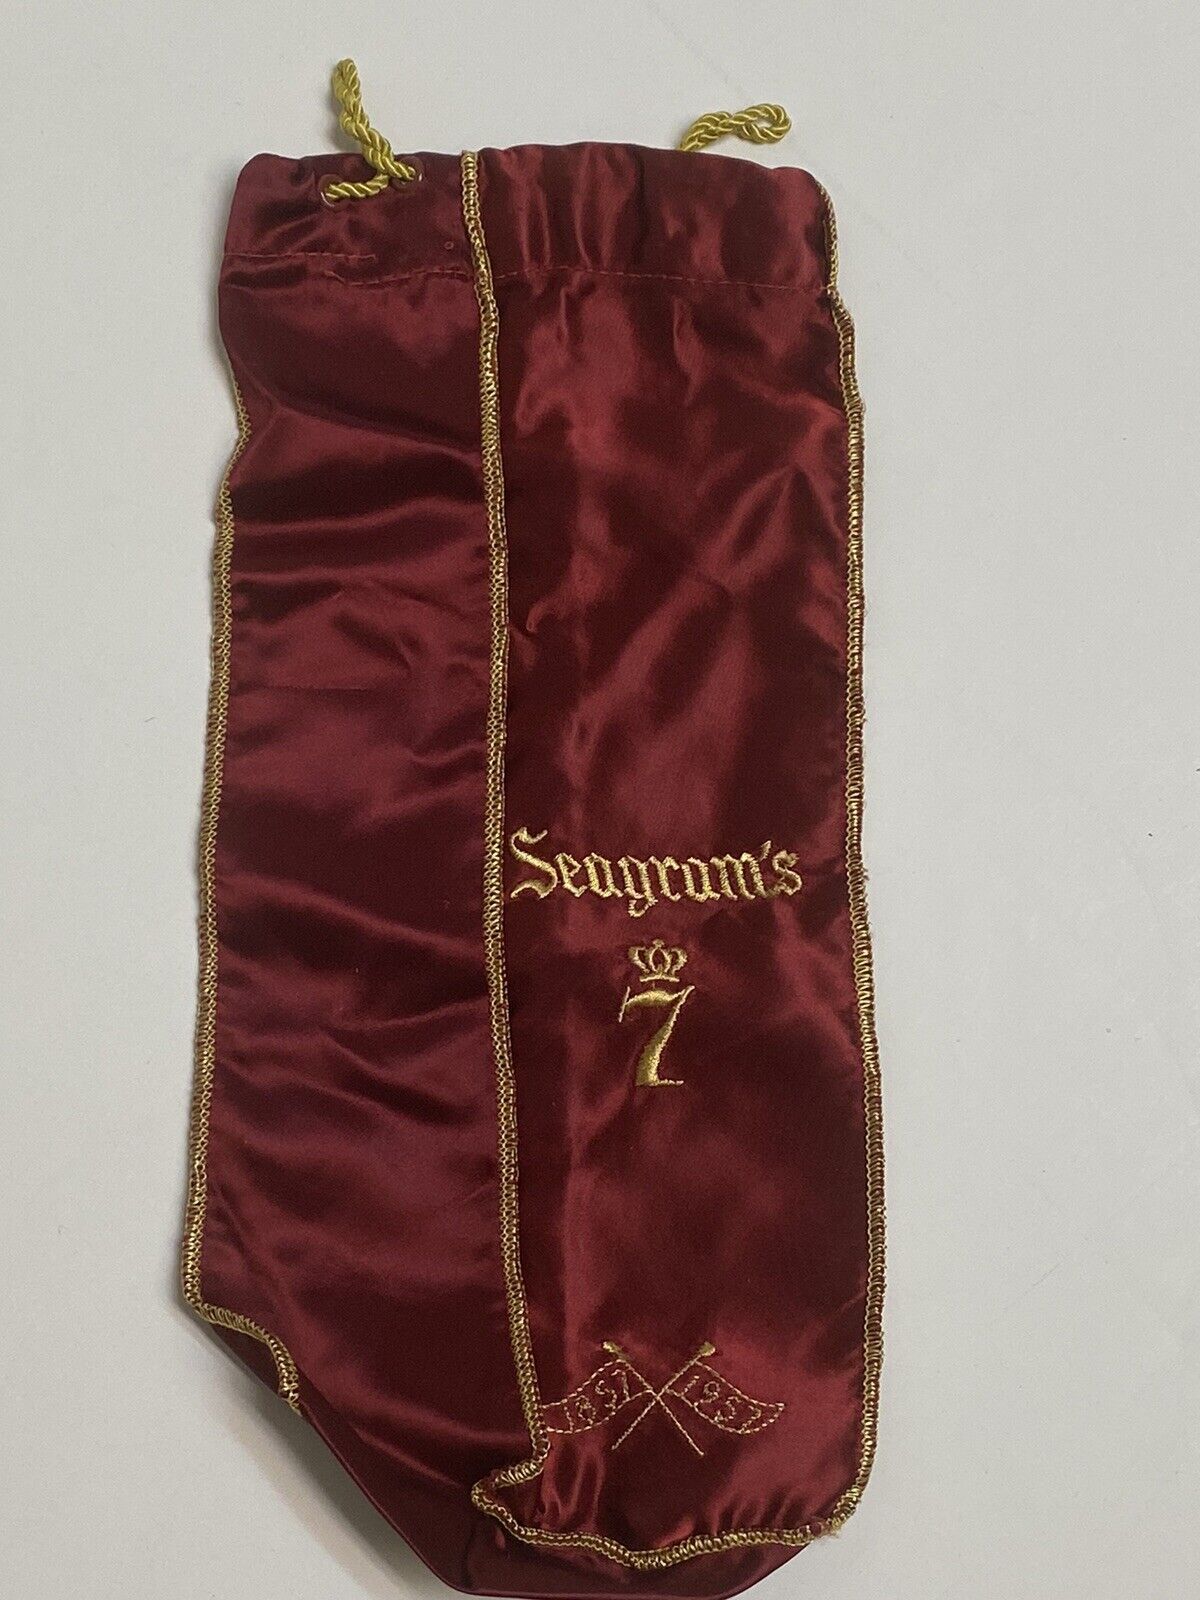 Vintage Seagram\'s 7 Red Satin with Gold Trim 1857-1957 Centennial Bottle Bag